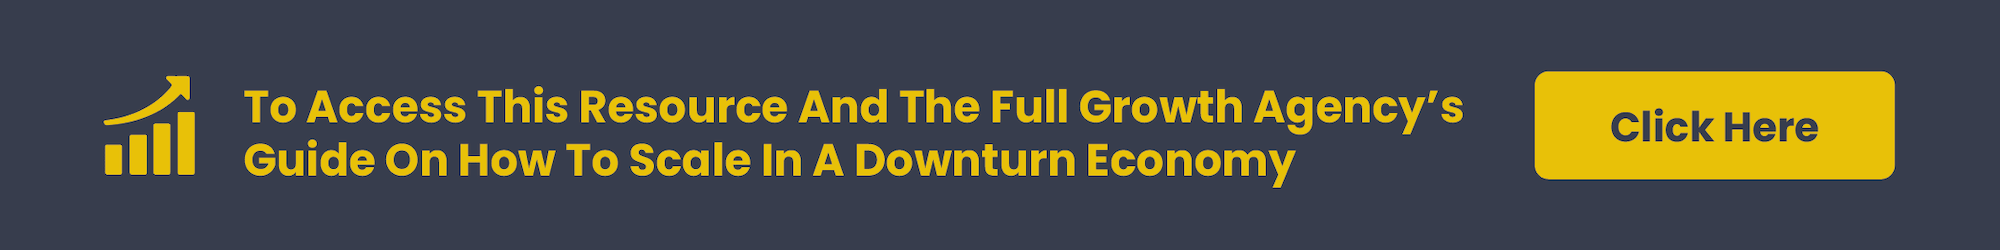 6t30 - Downturn Econoy - P1 - Download Guide CTA